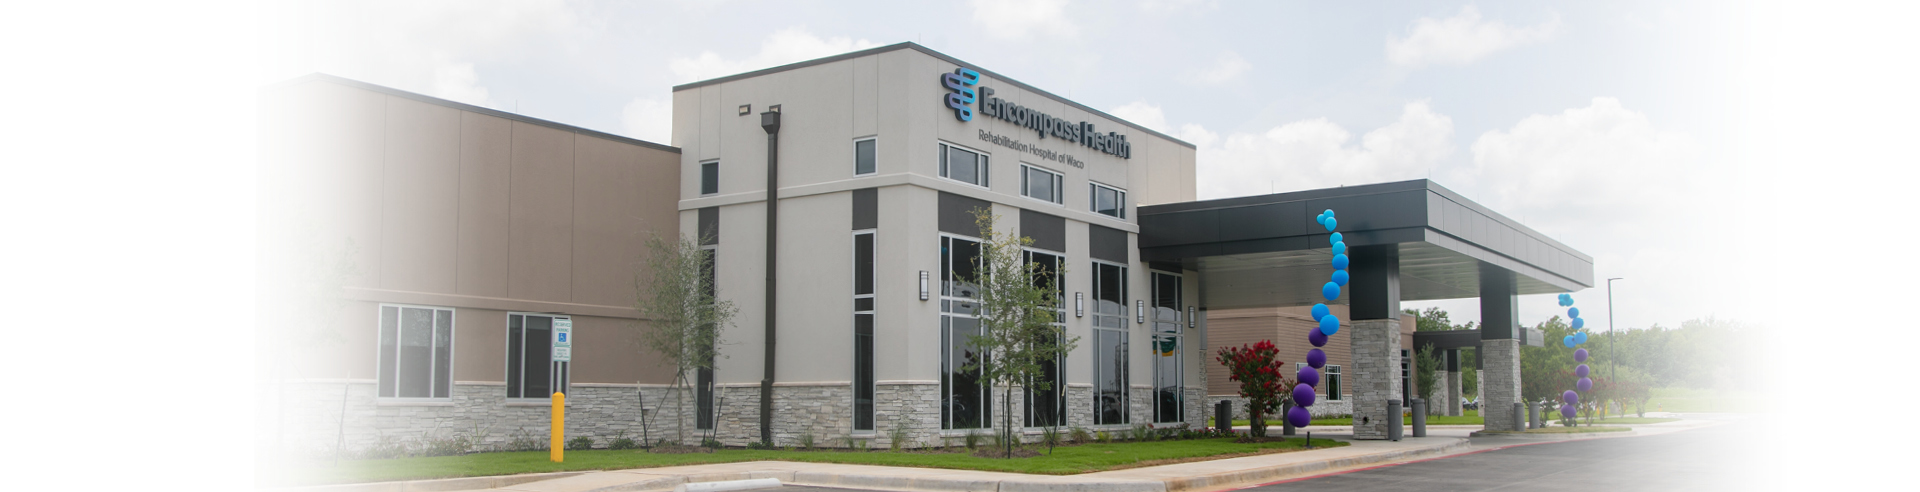 Encompass Health Rehabilitation Hospital of Waco exterior